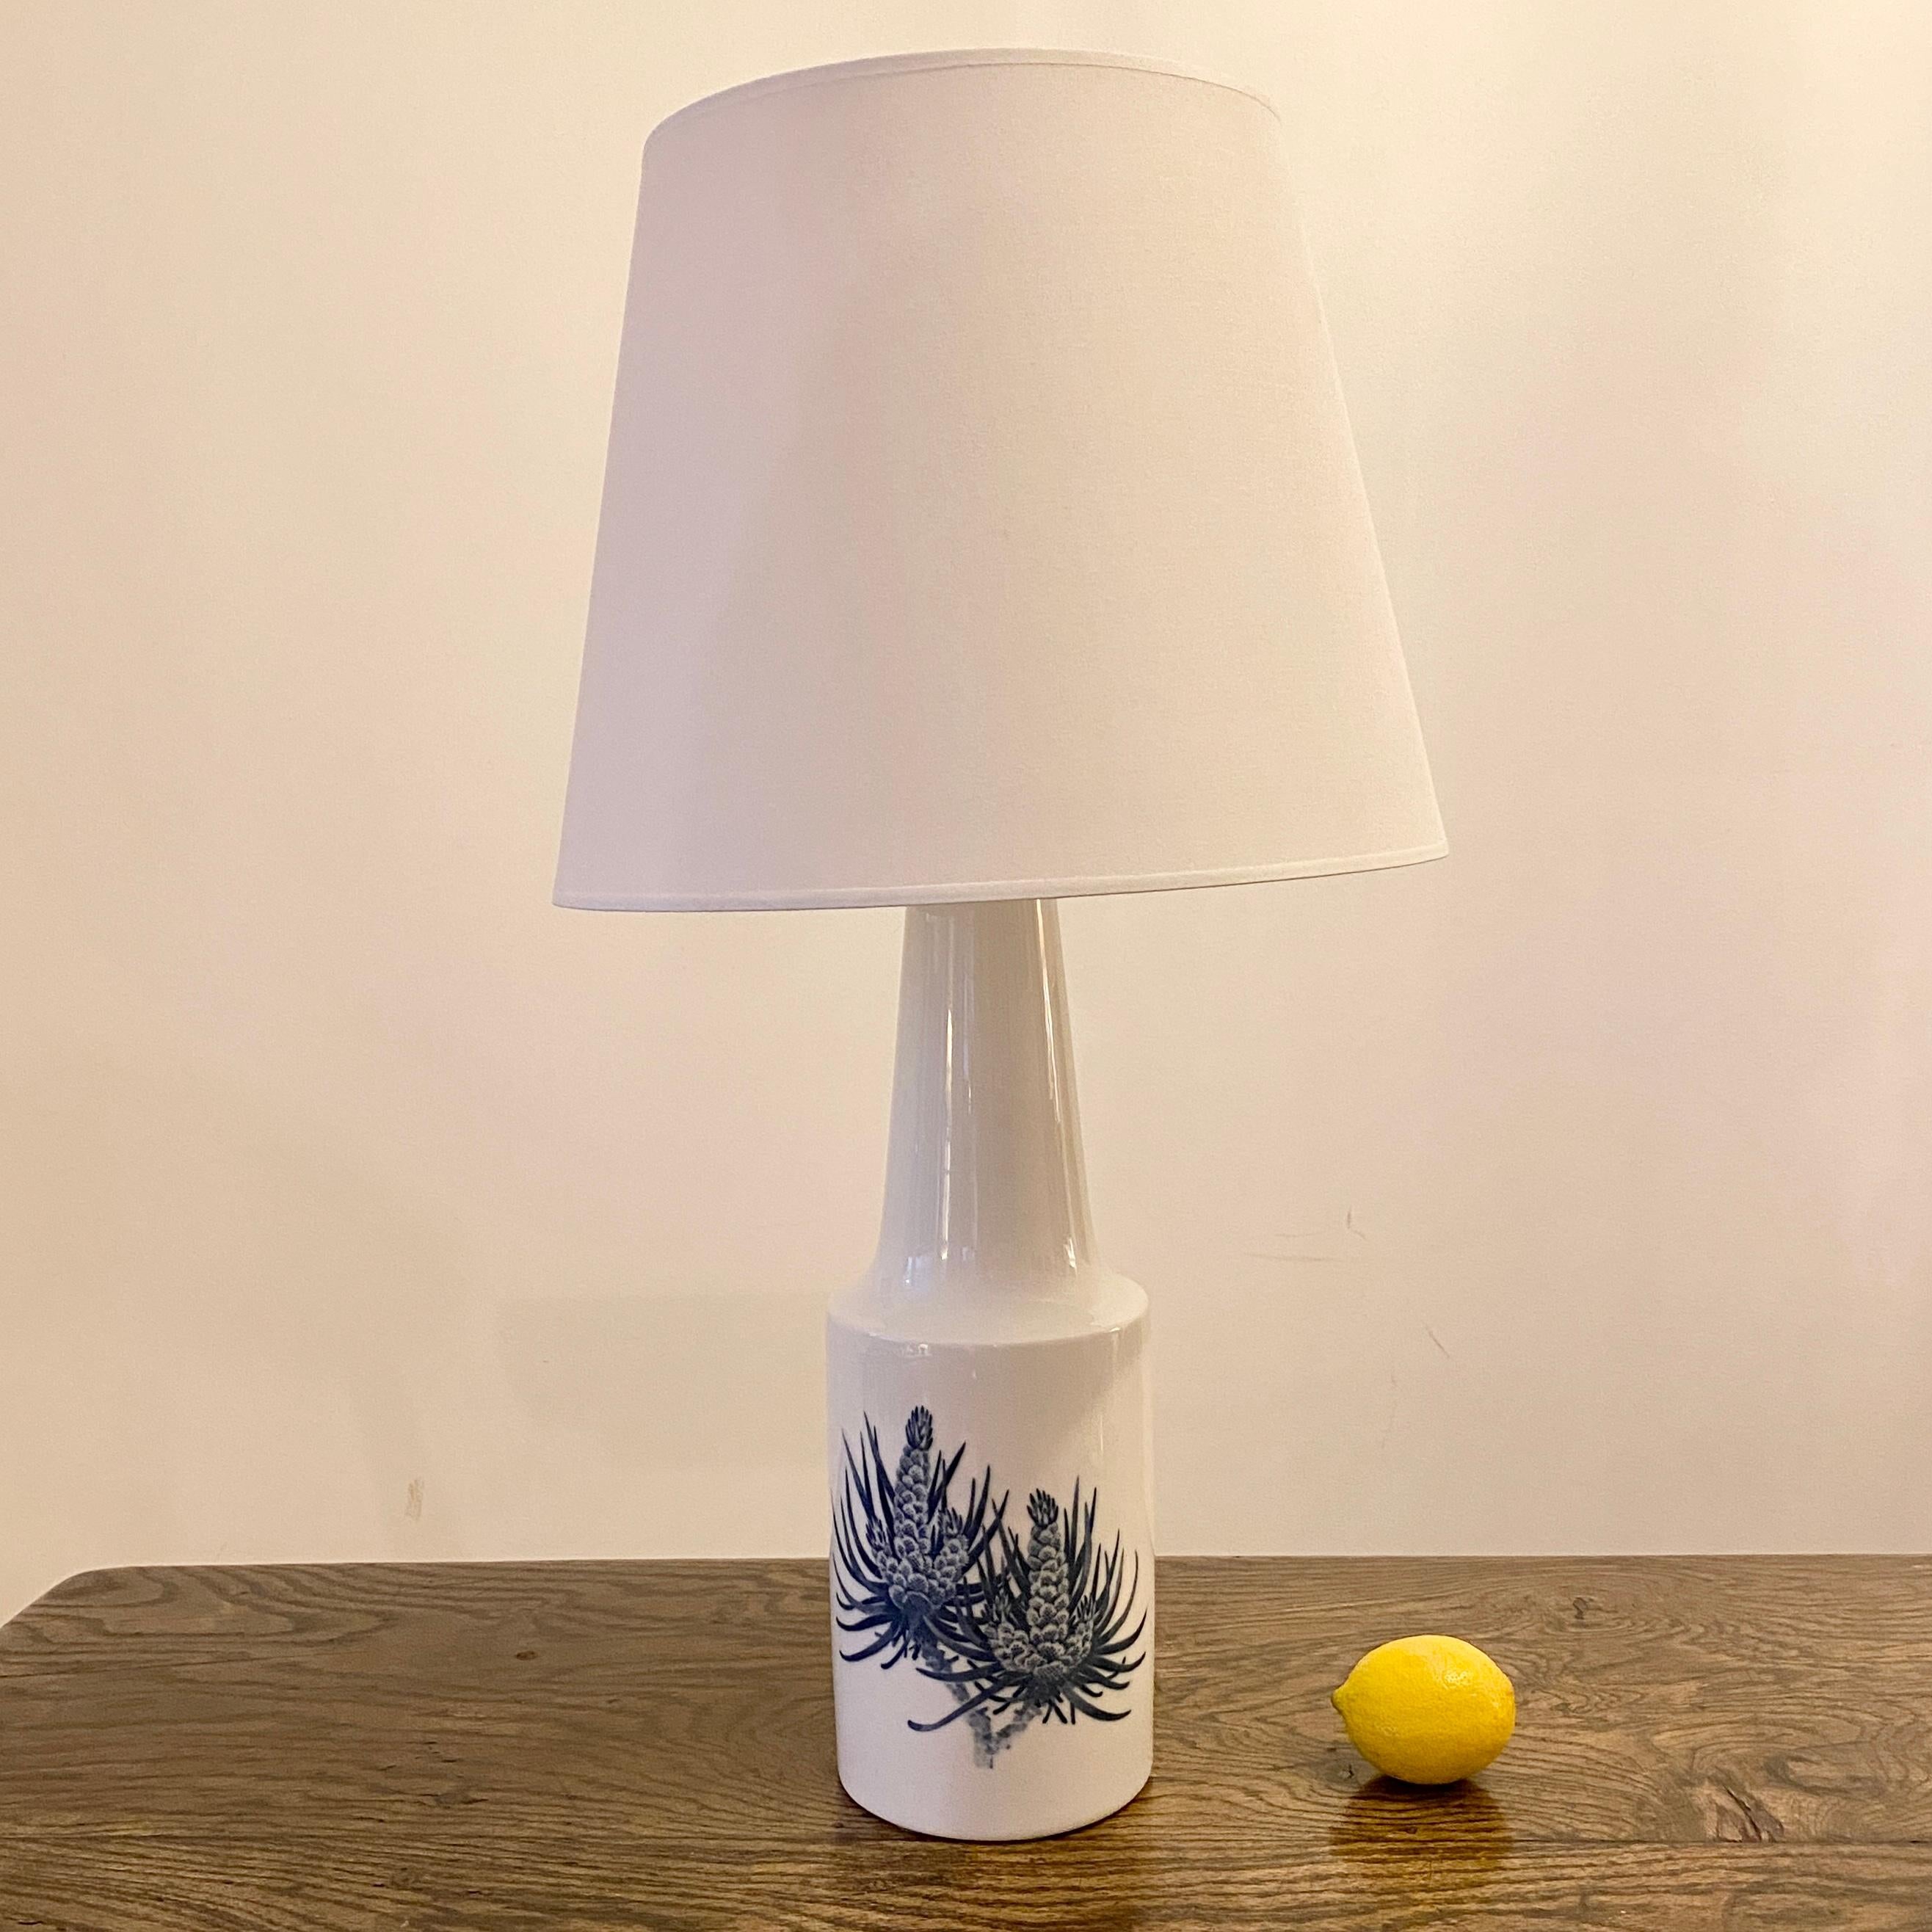 3 Royal Copenhagen Porcelain Table Lamps with Blue Conifer Cone by Fog & Mørup  For Sale 1